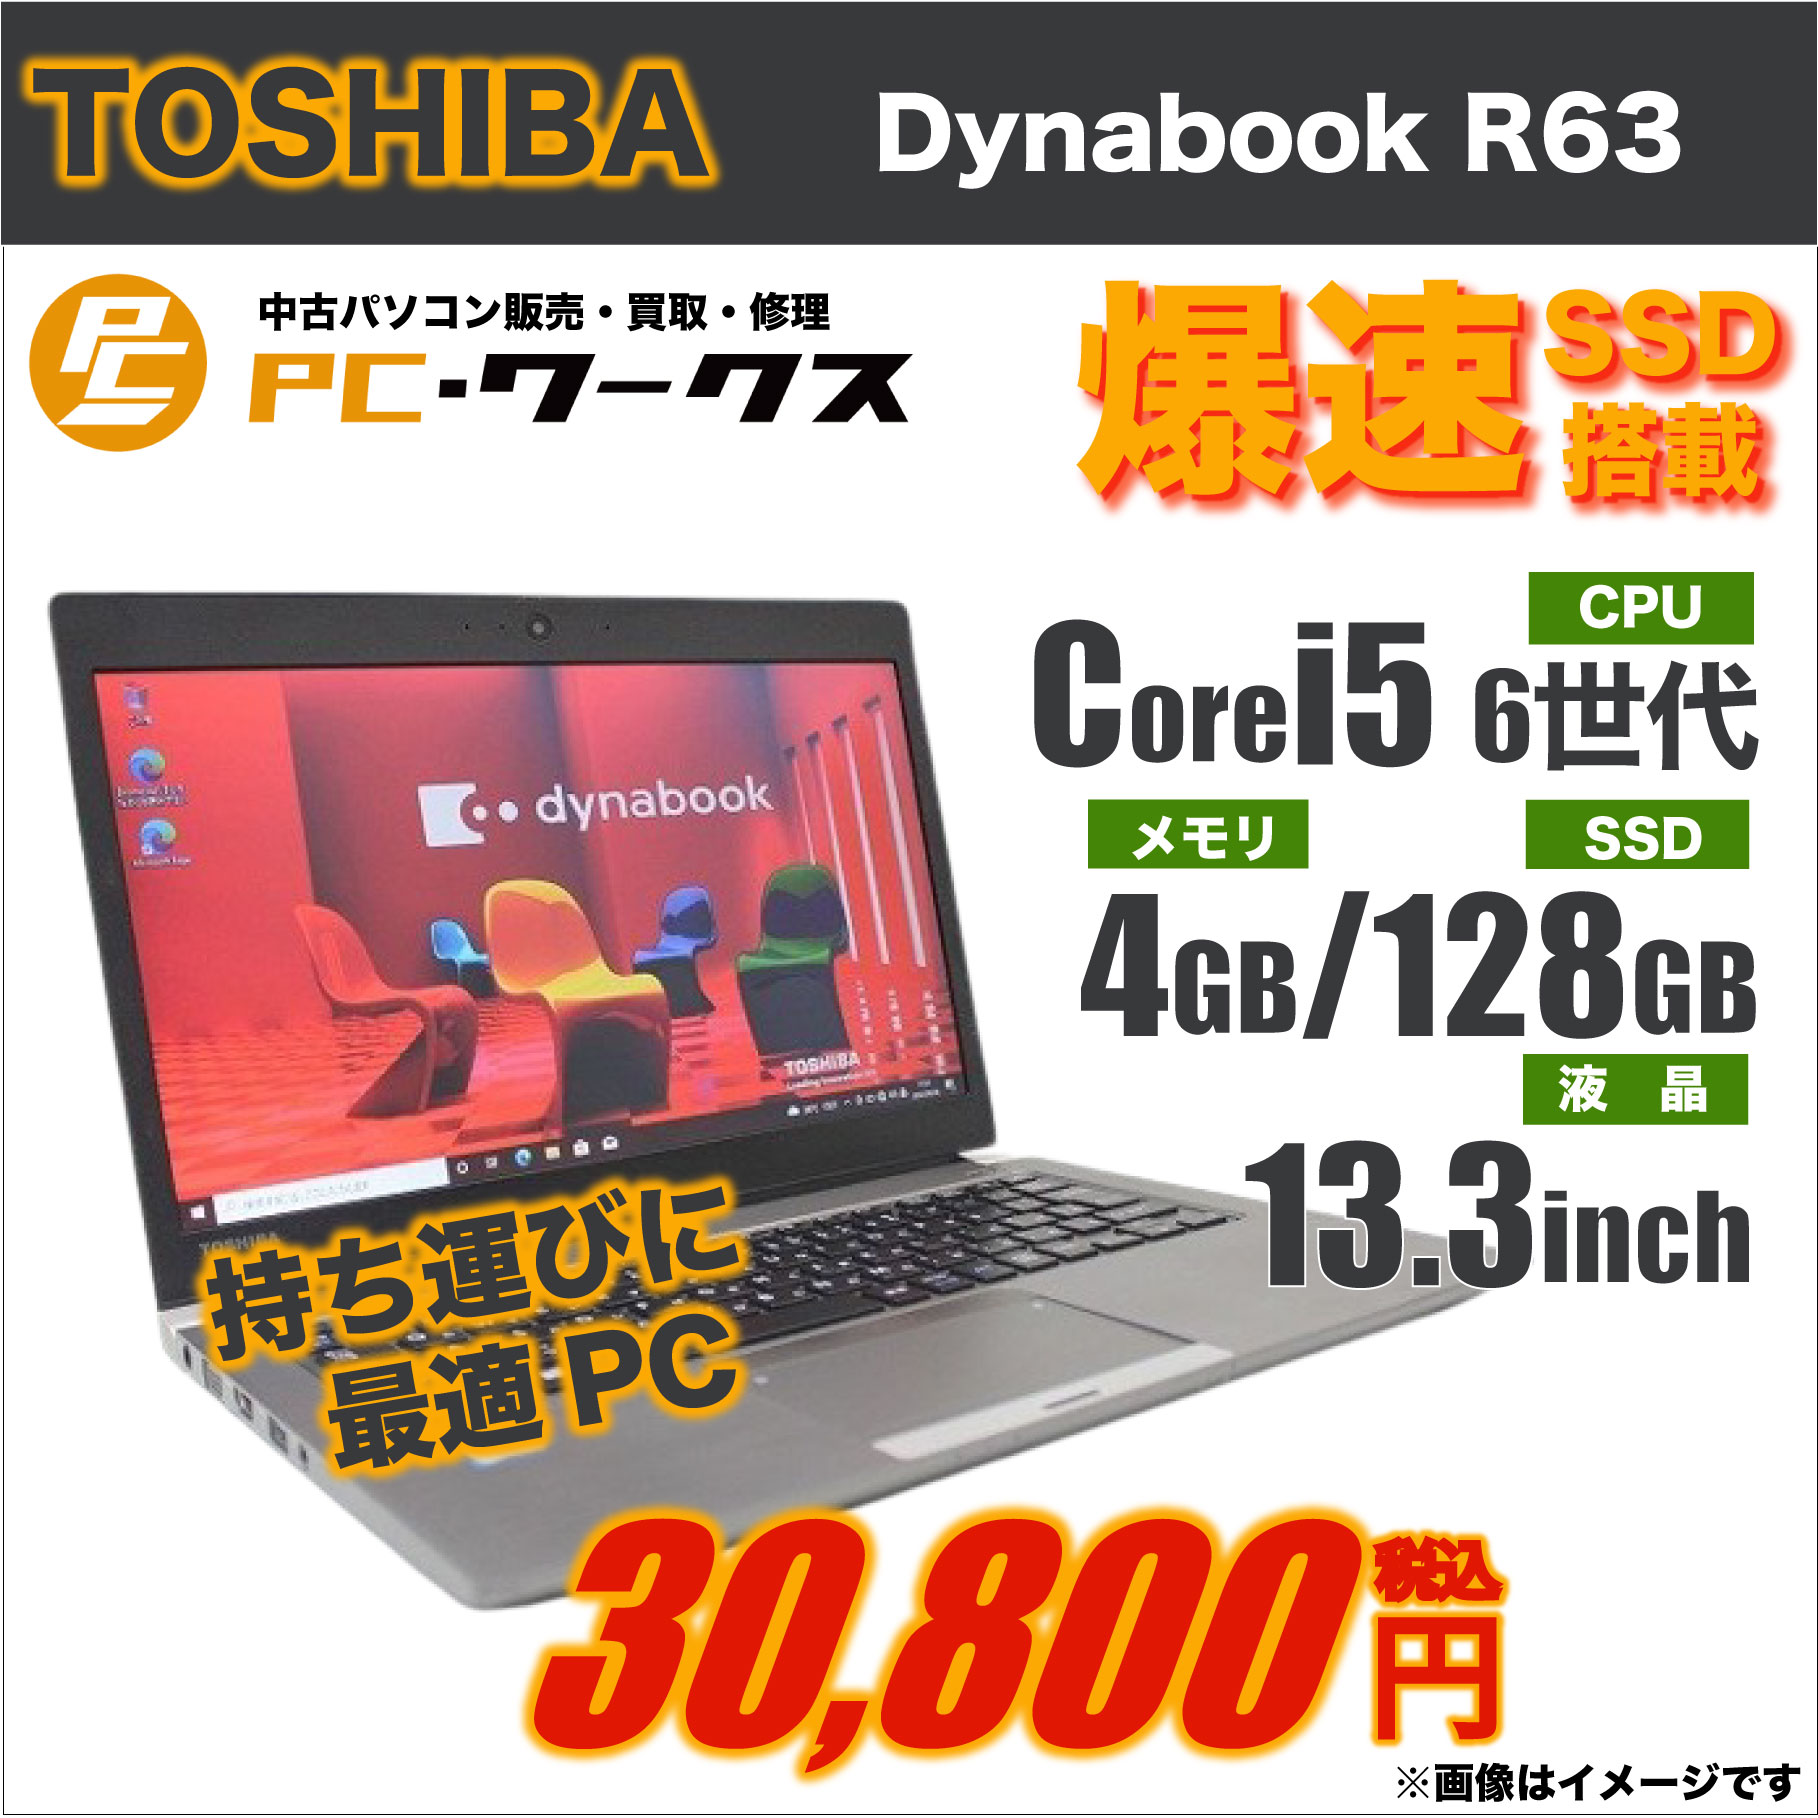 TOSHIBA 東芝 Dynabook ダイナブック R63 Corei5 6世代